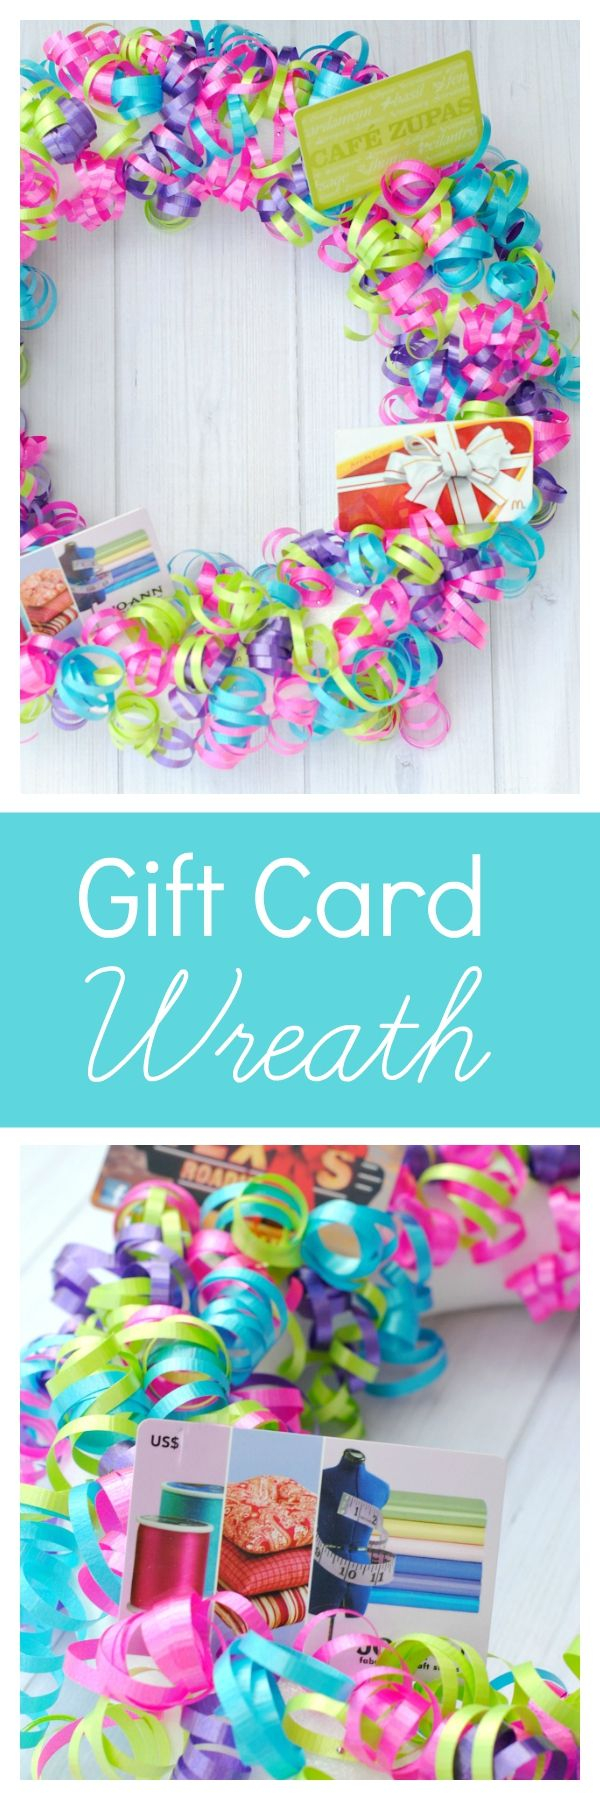 Gift Card Birthday Ideas Birthday Gifts Creative Gift Card Ideas This Gift Card Wreath Is A